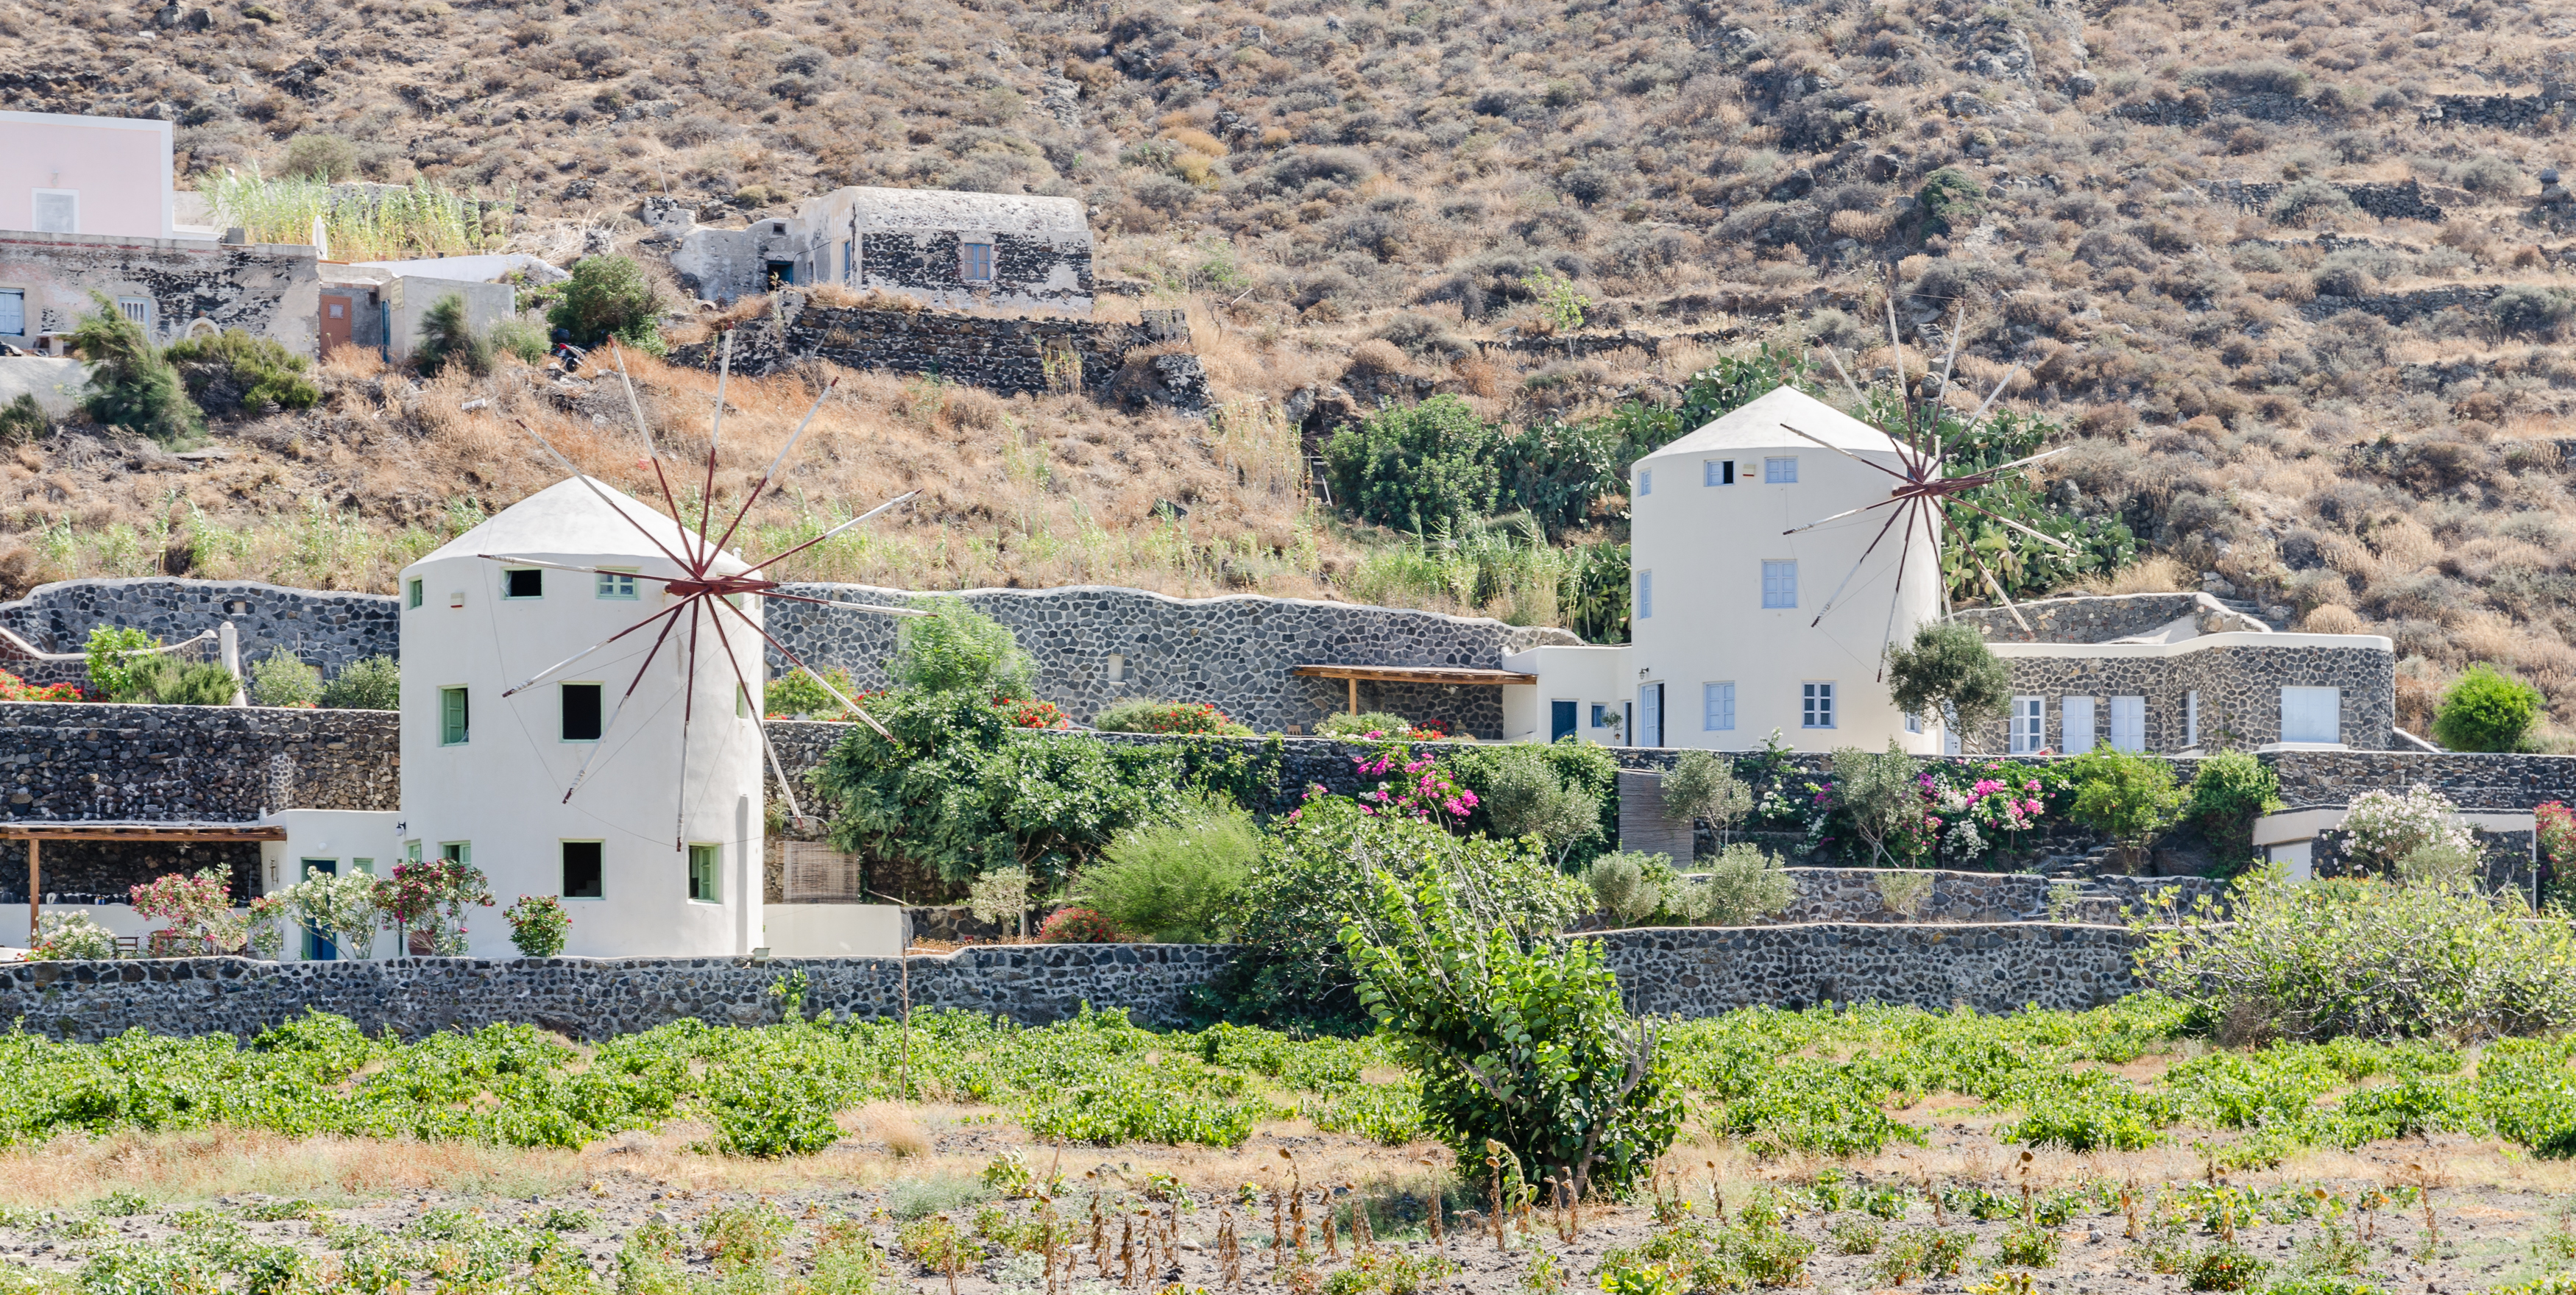 07-17-2012 - Windmills - Santorini - Greece - 02